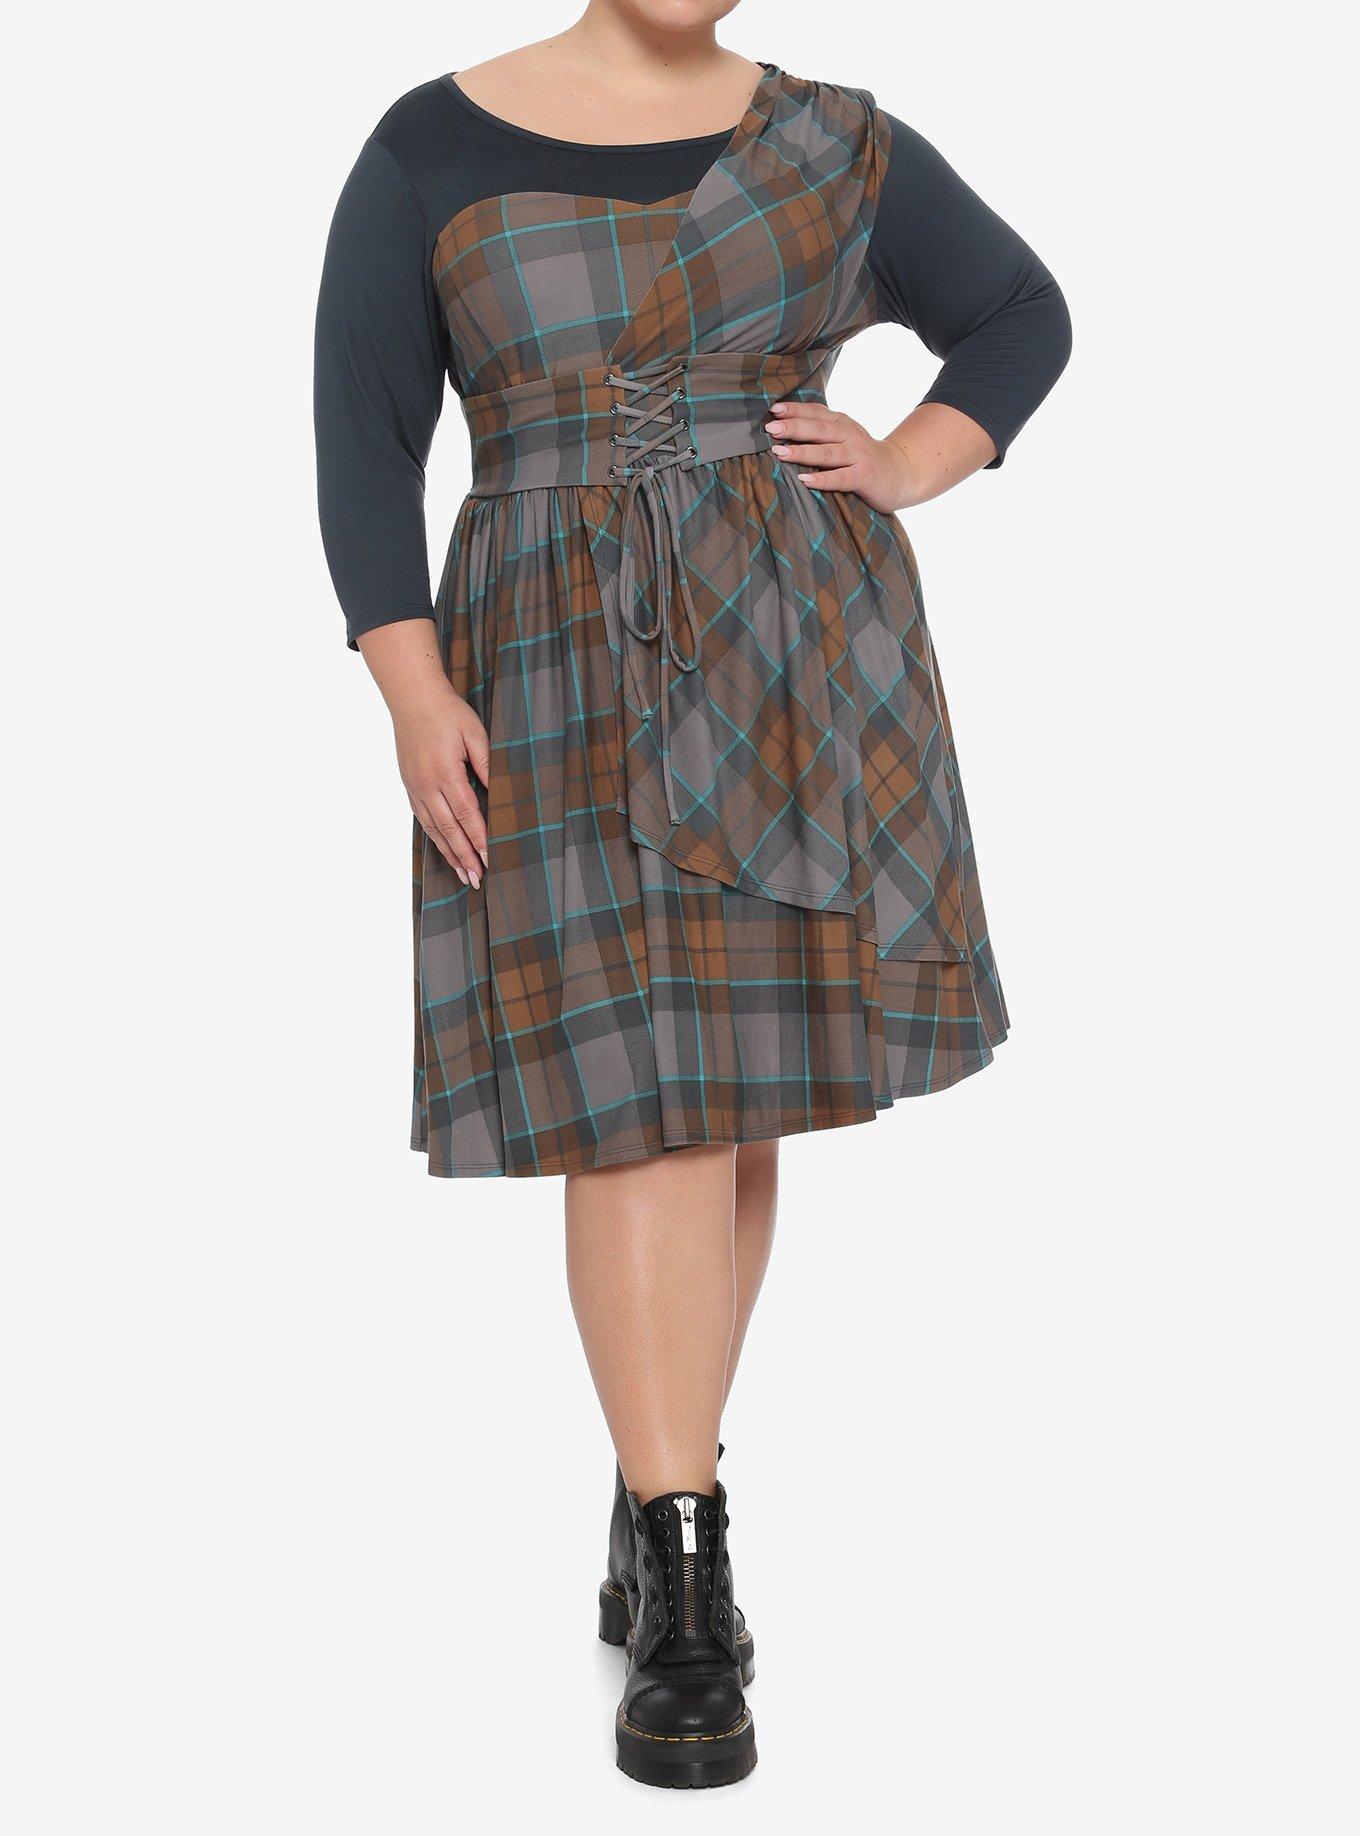 Outlander MacKenzie Tartan Cinch Dress Plus Size, MULTI, alternate